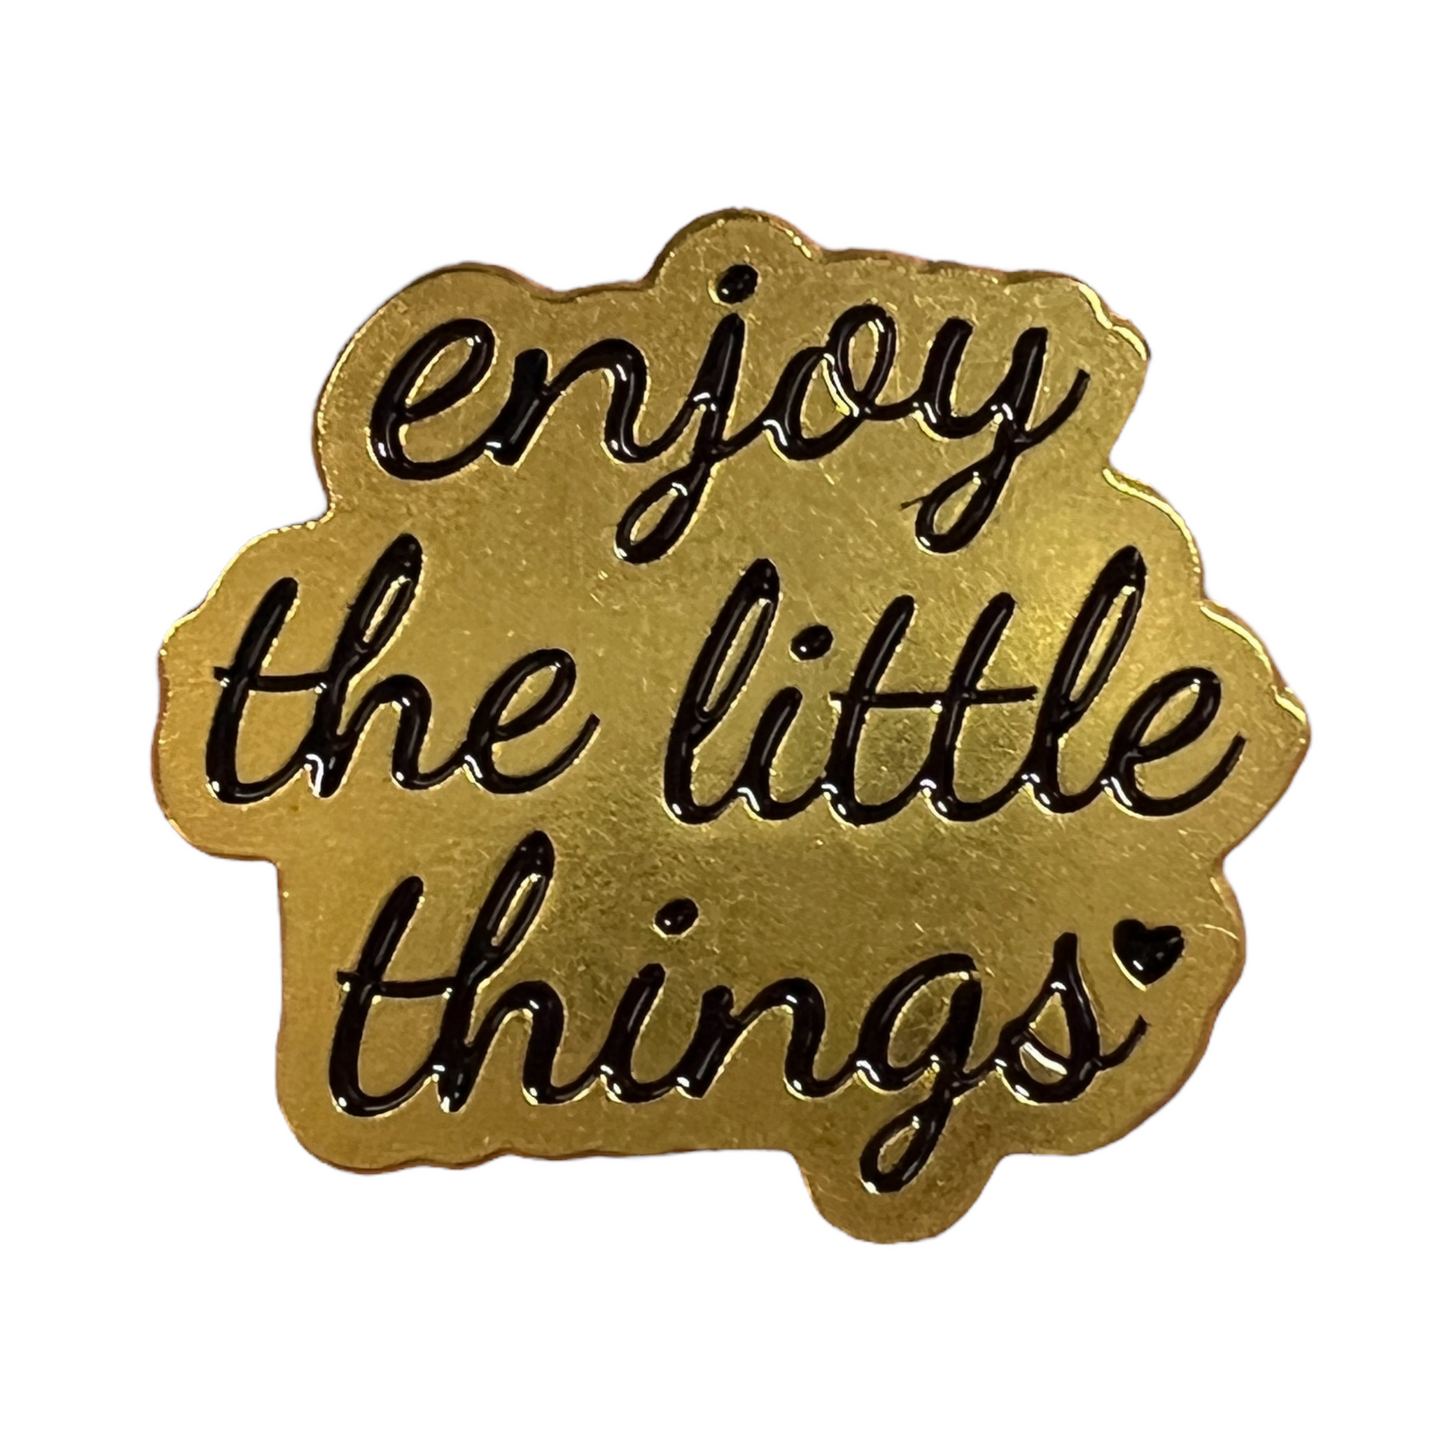 Pin — 'Enjoy The Little Things'  SPIRIT SPARKPLUGS   